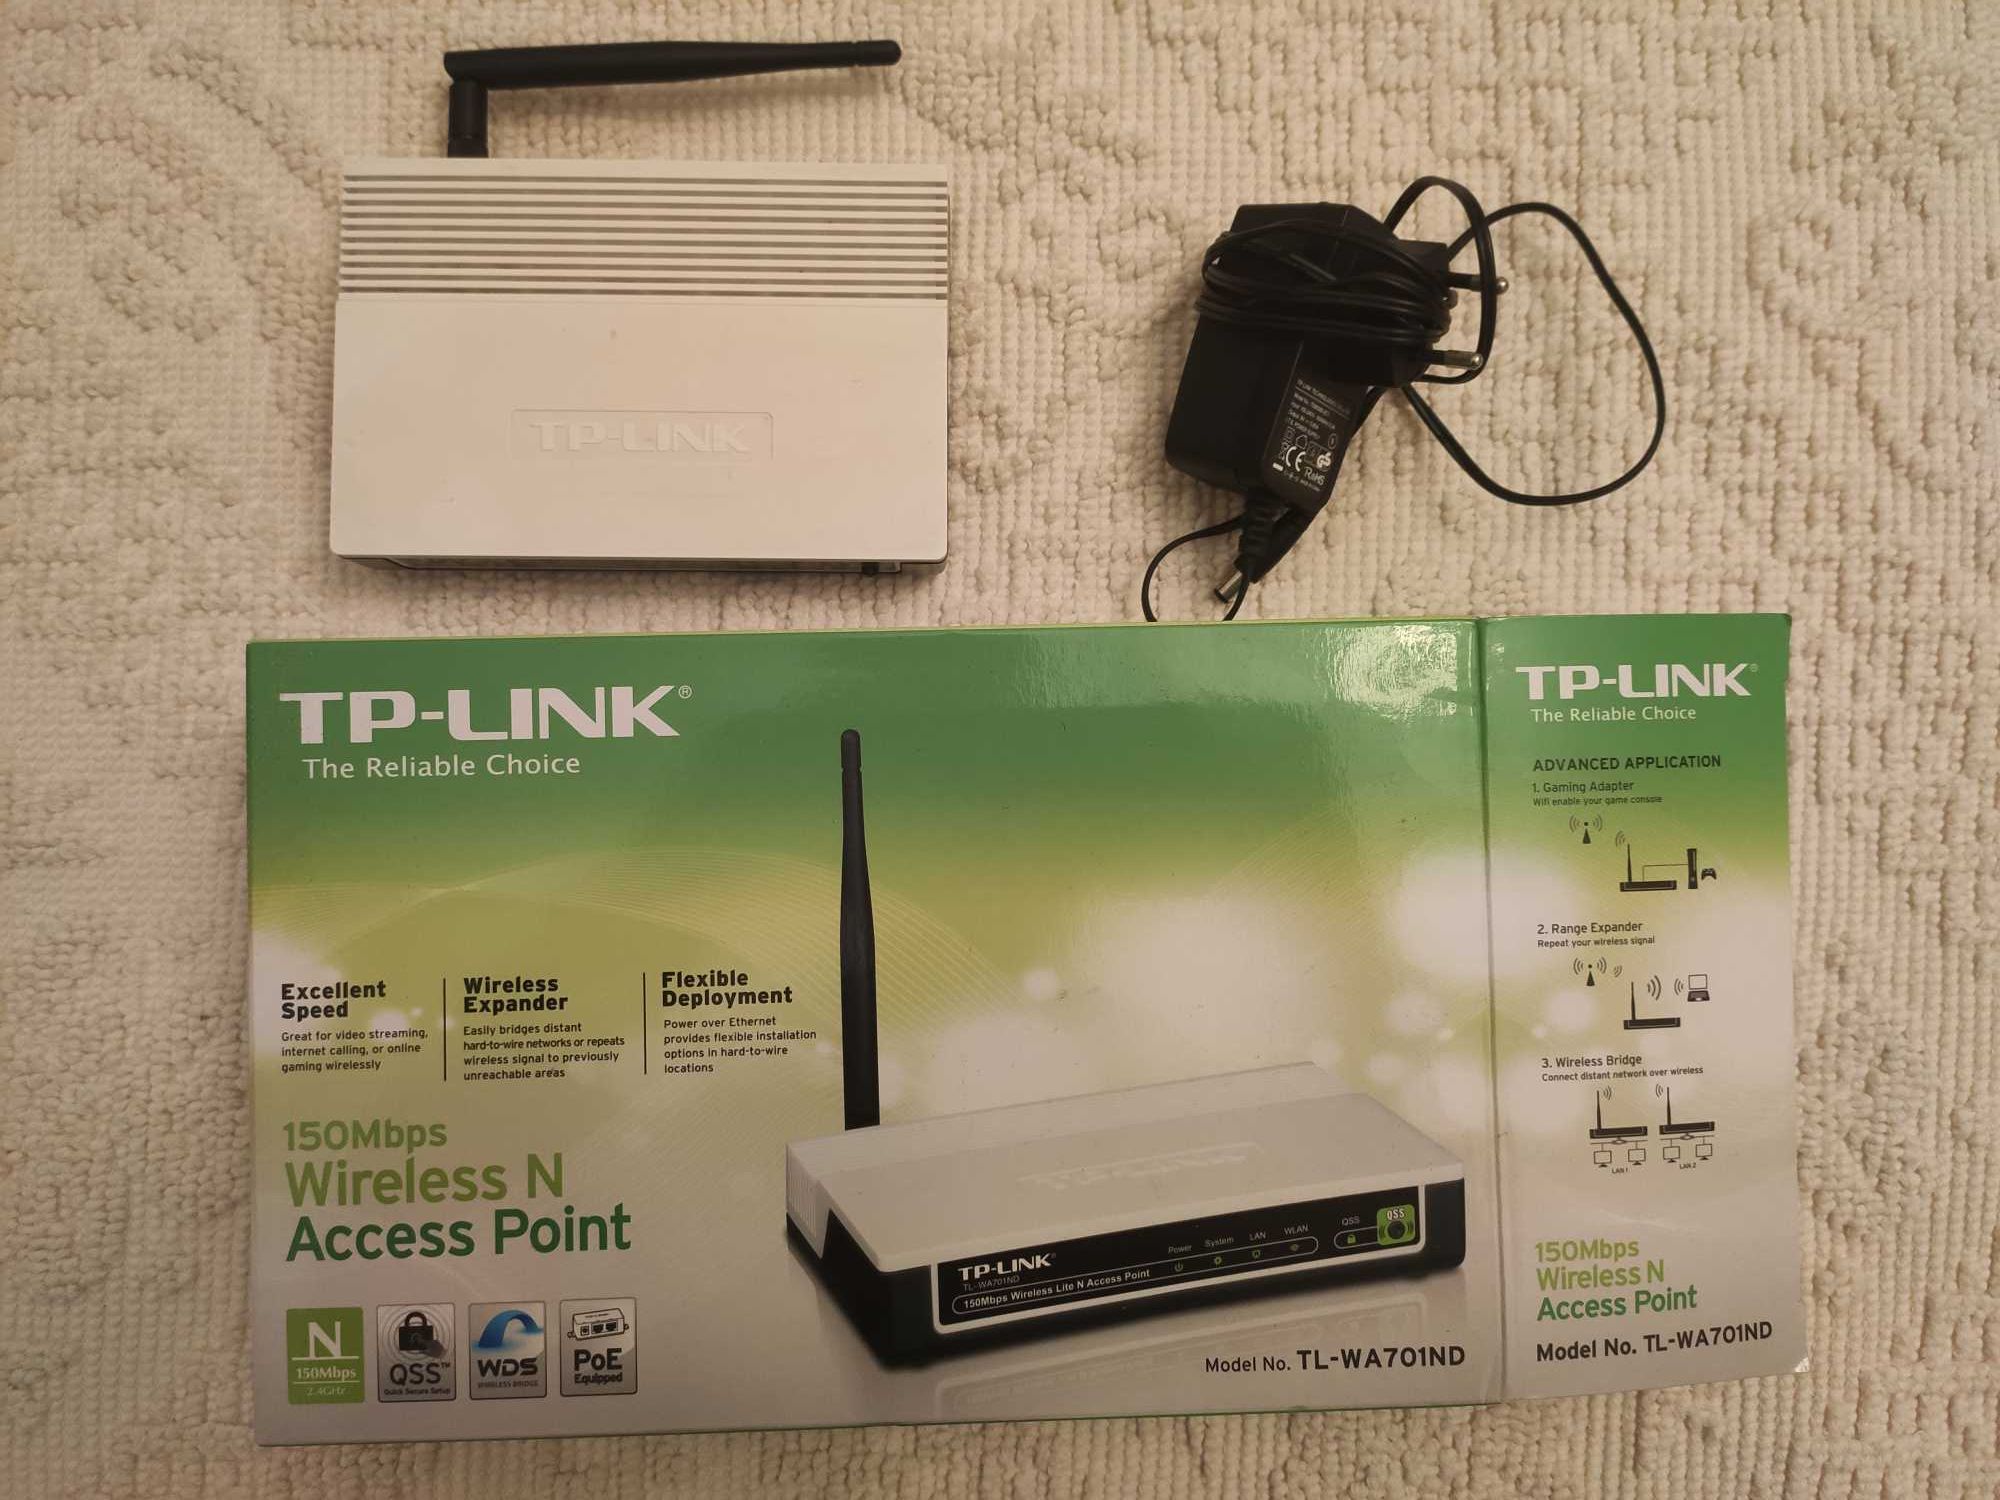 Vendo TP-LINK Acess Point / Range extender / wireless bridge